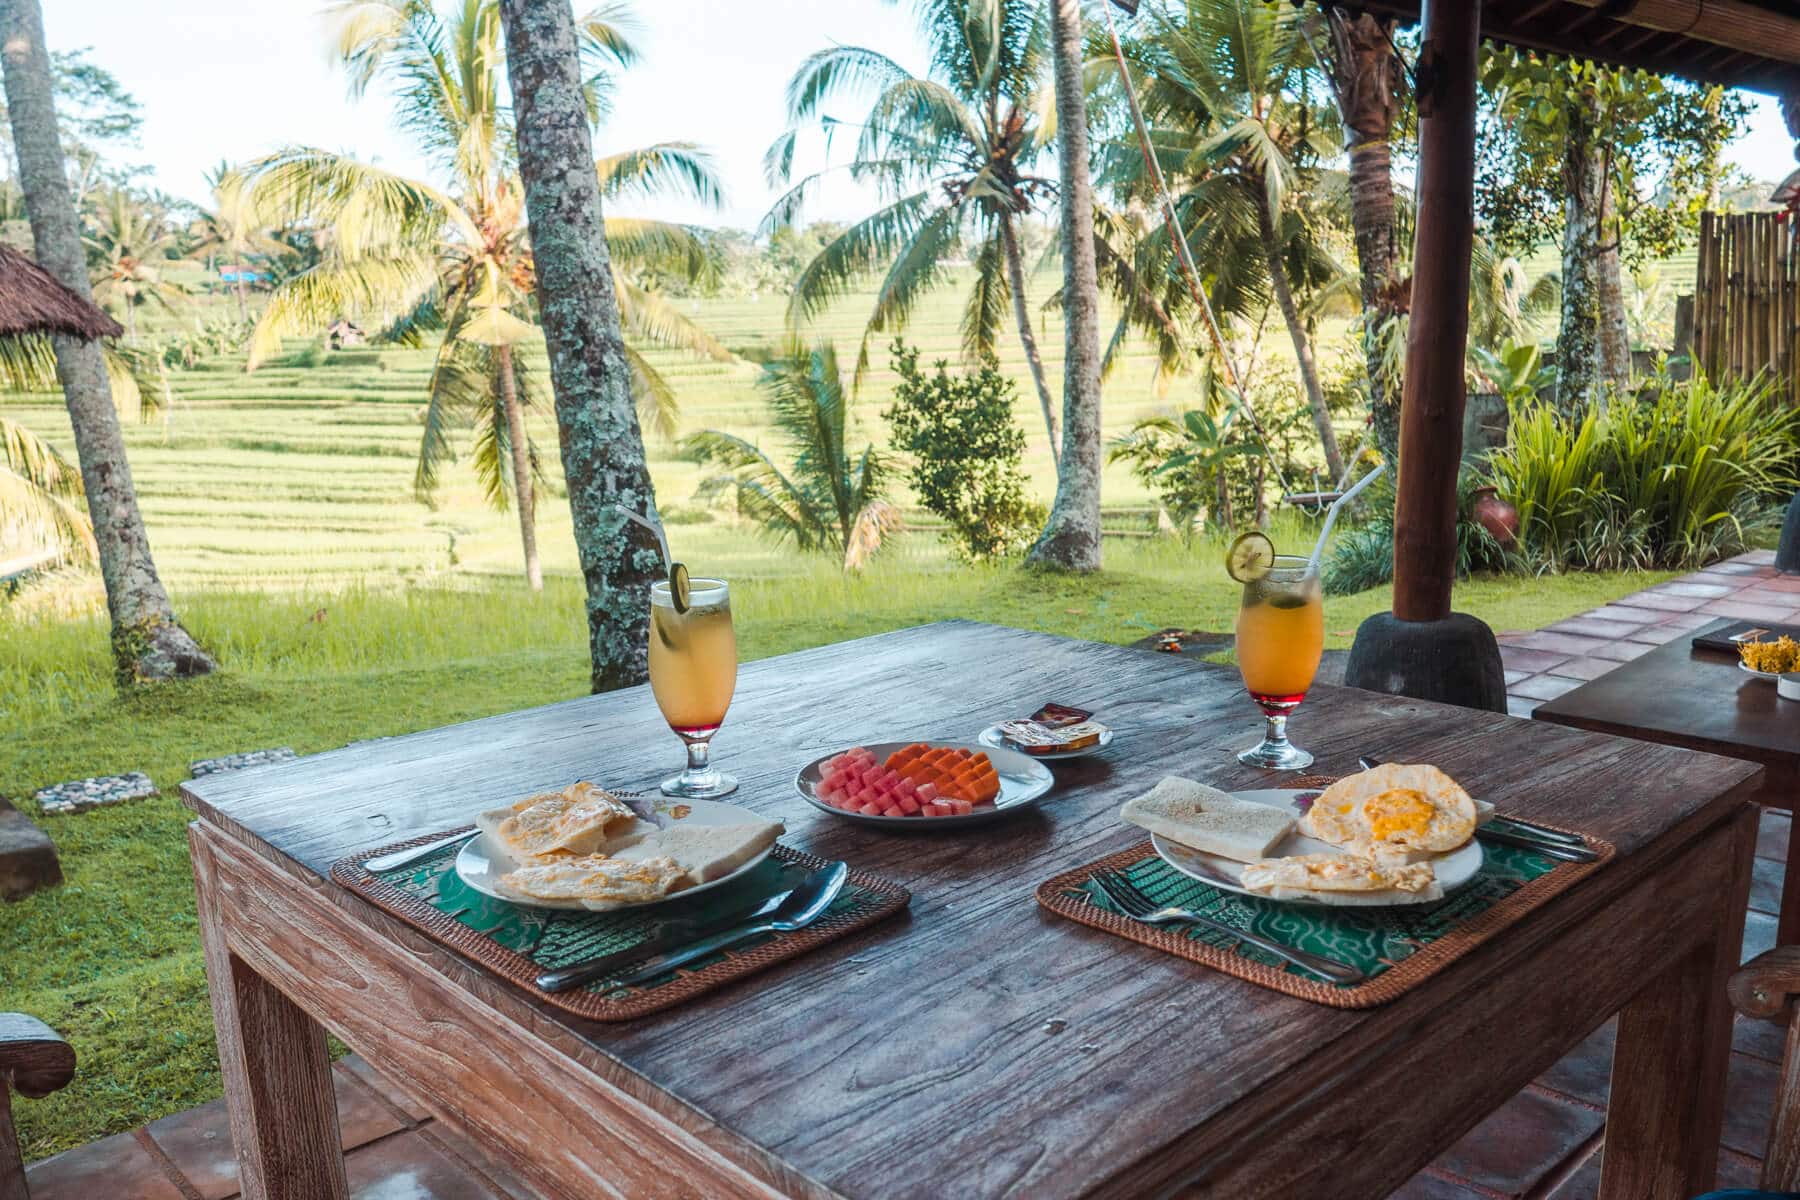 Island Life #4 - Breakfast in our garden overlooking the rice fields in Ubud